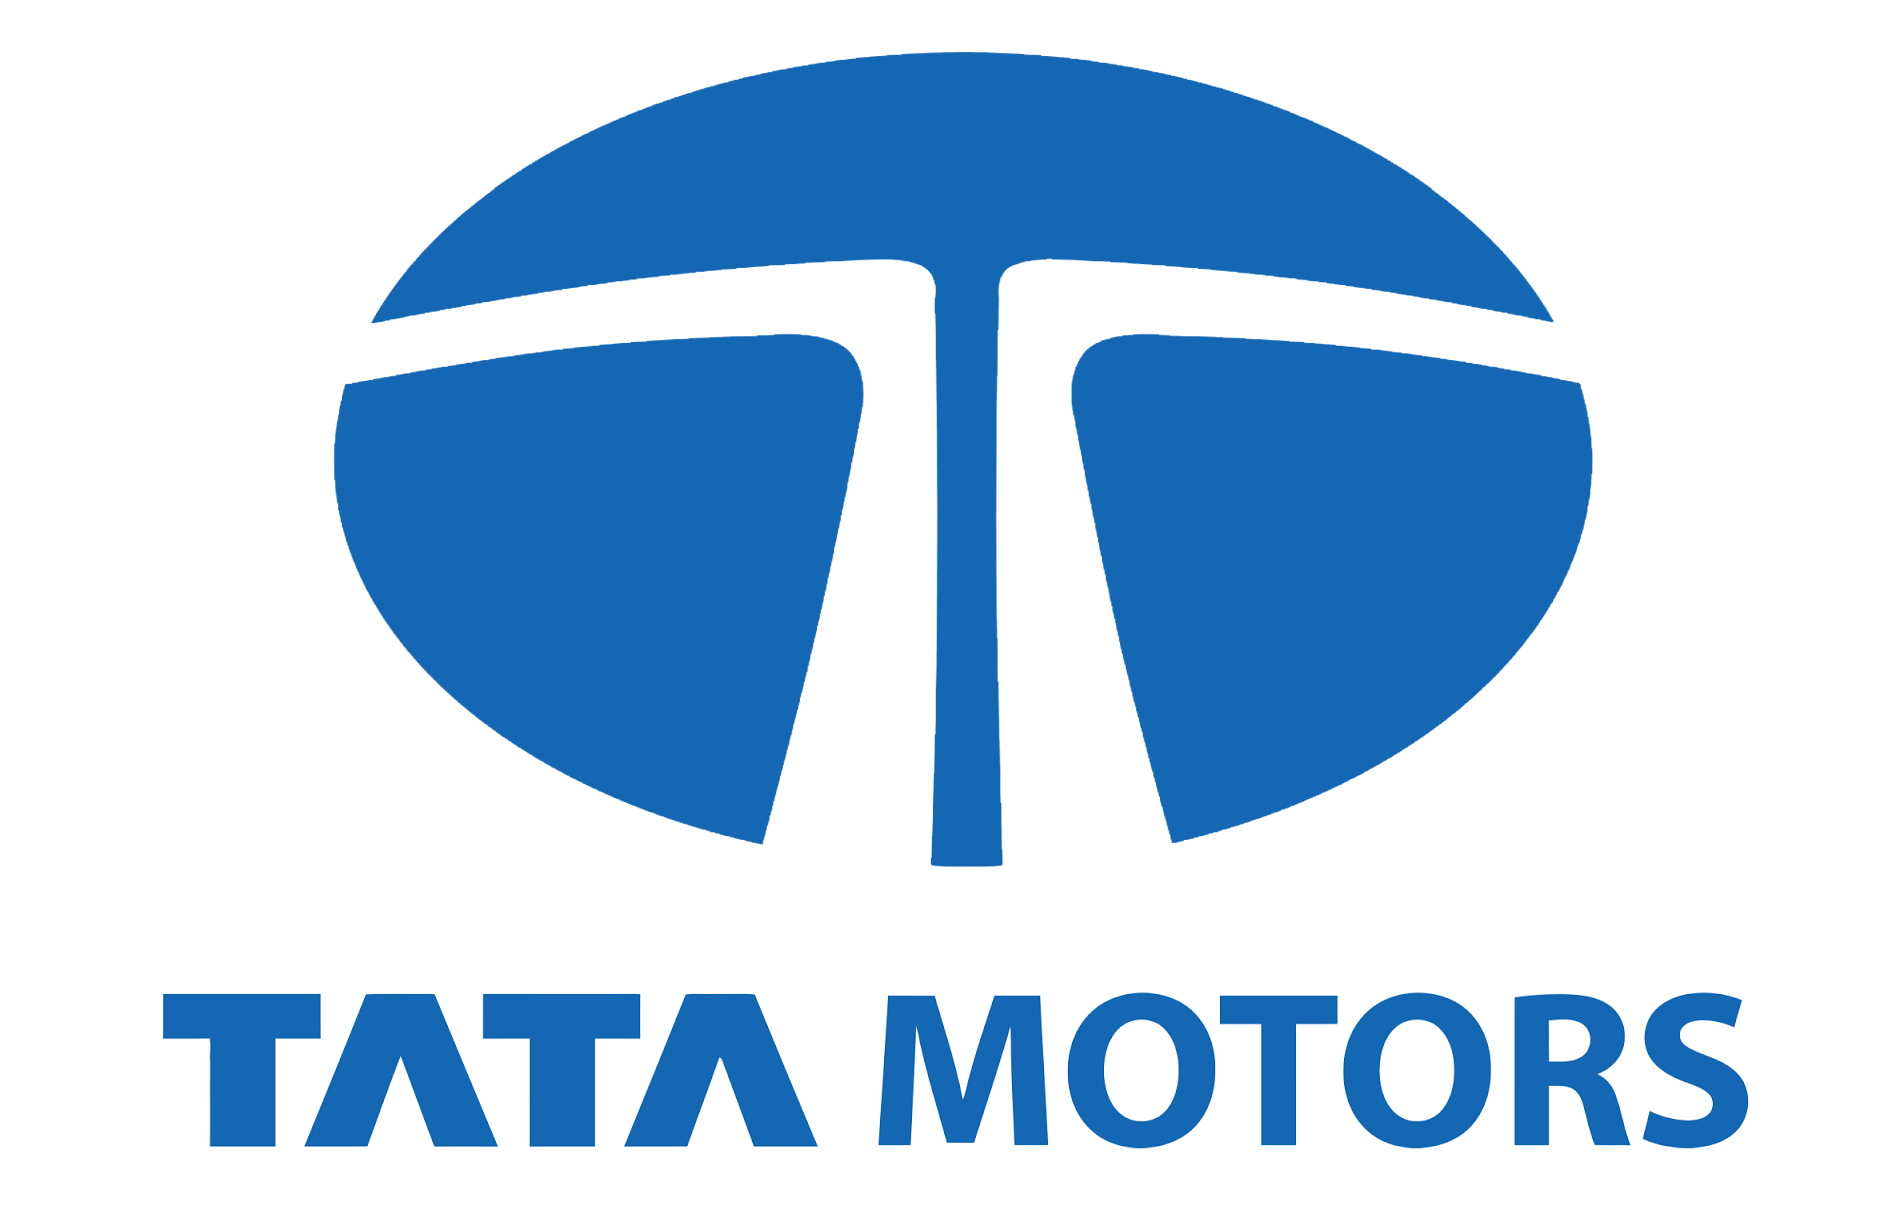 Tata Motors Cars Showroom - National Garage|Service Center|Automotive